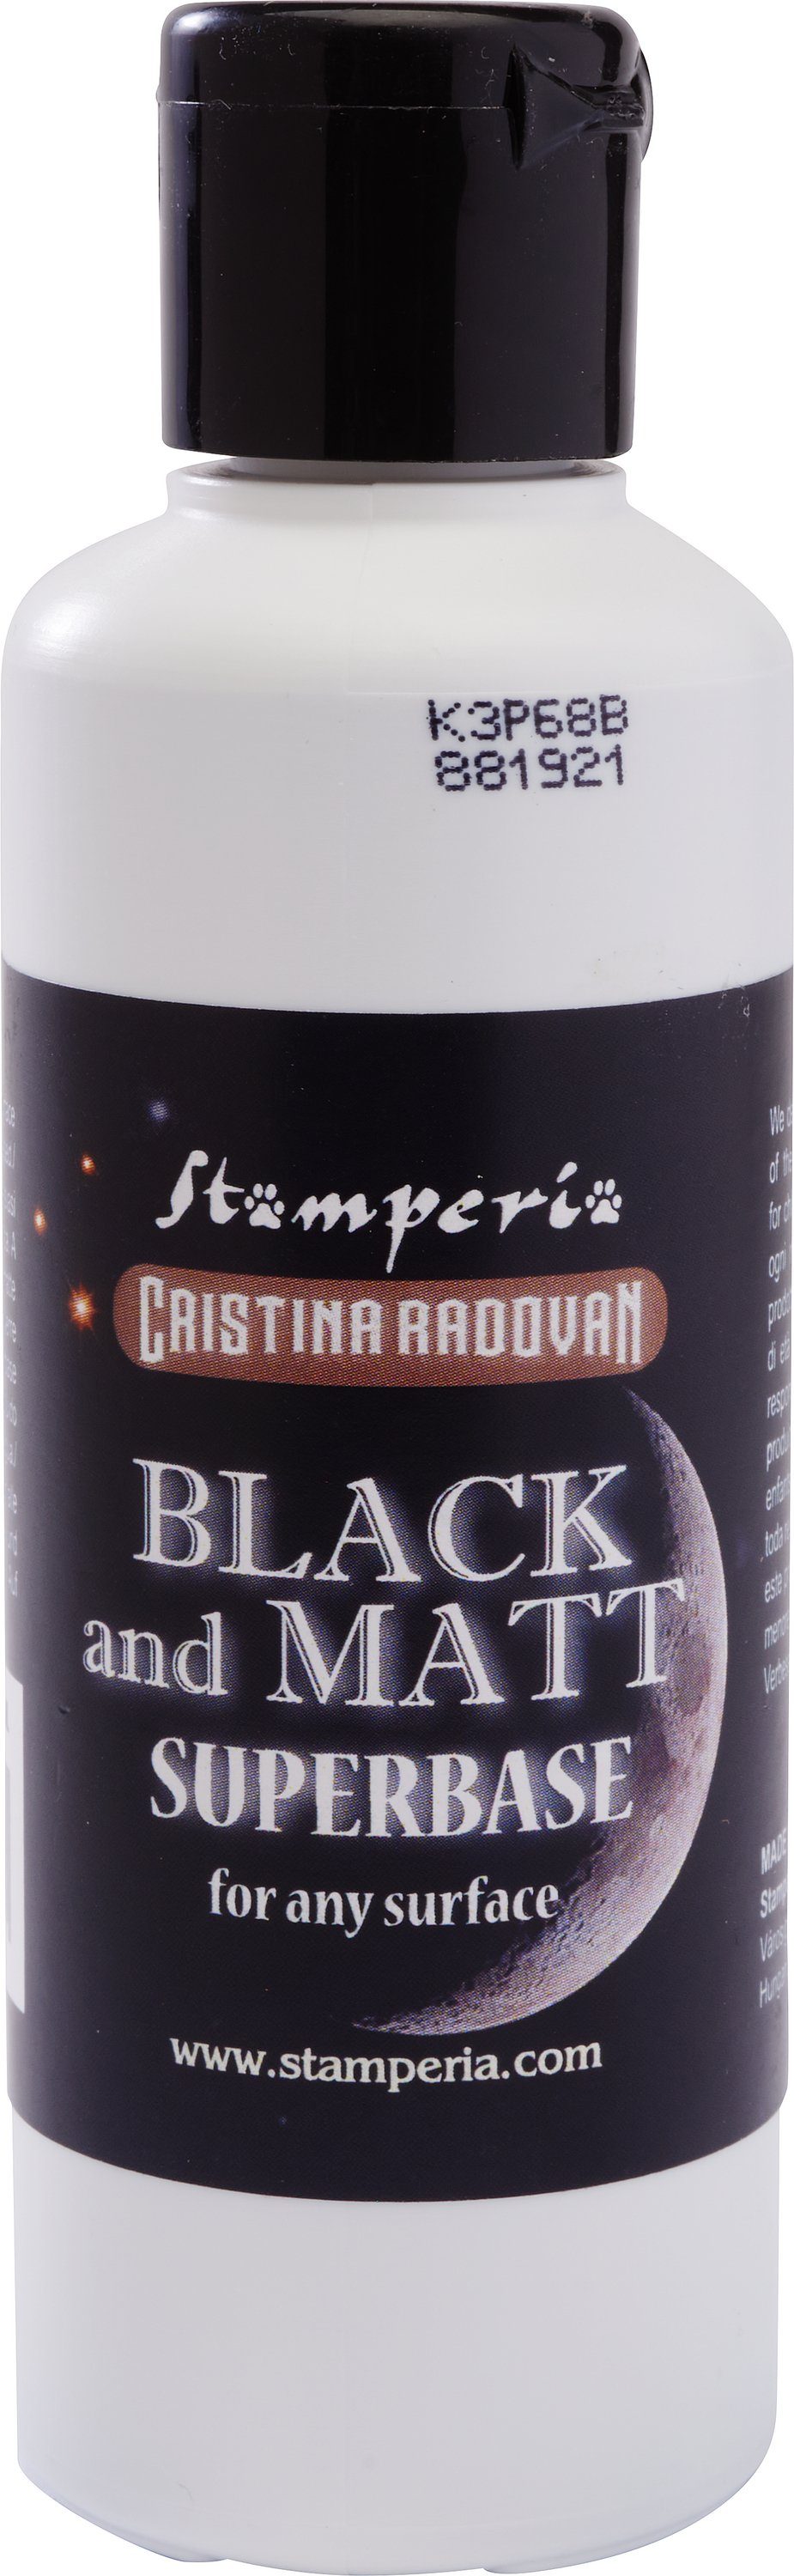 Stamperia Bastelfarbe Superbase BLACK and MATT, 80 ml